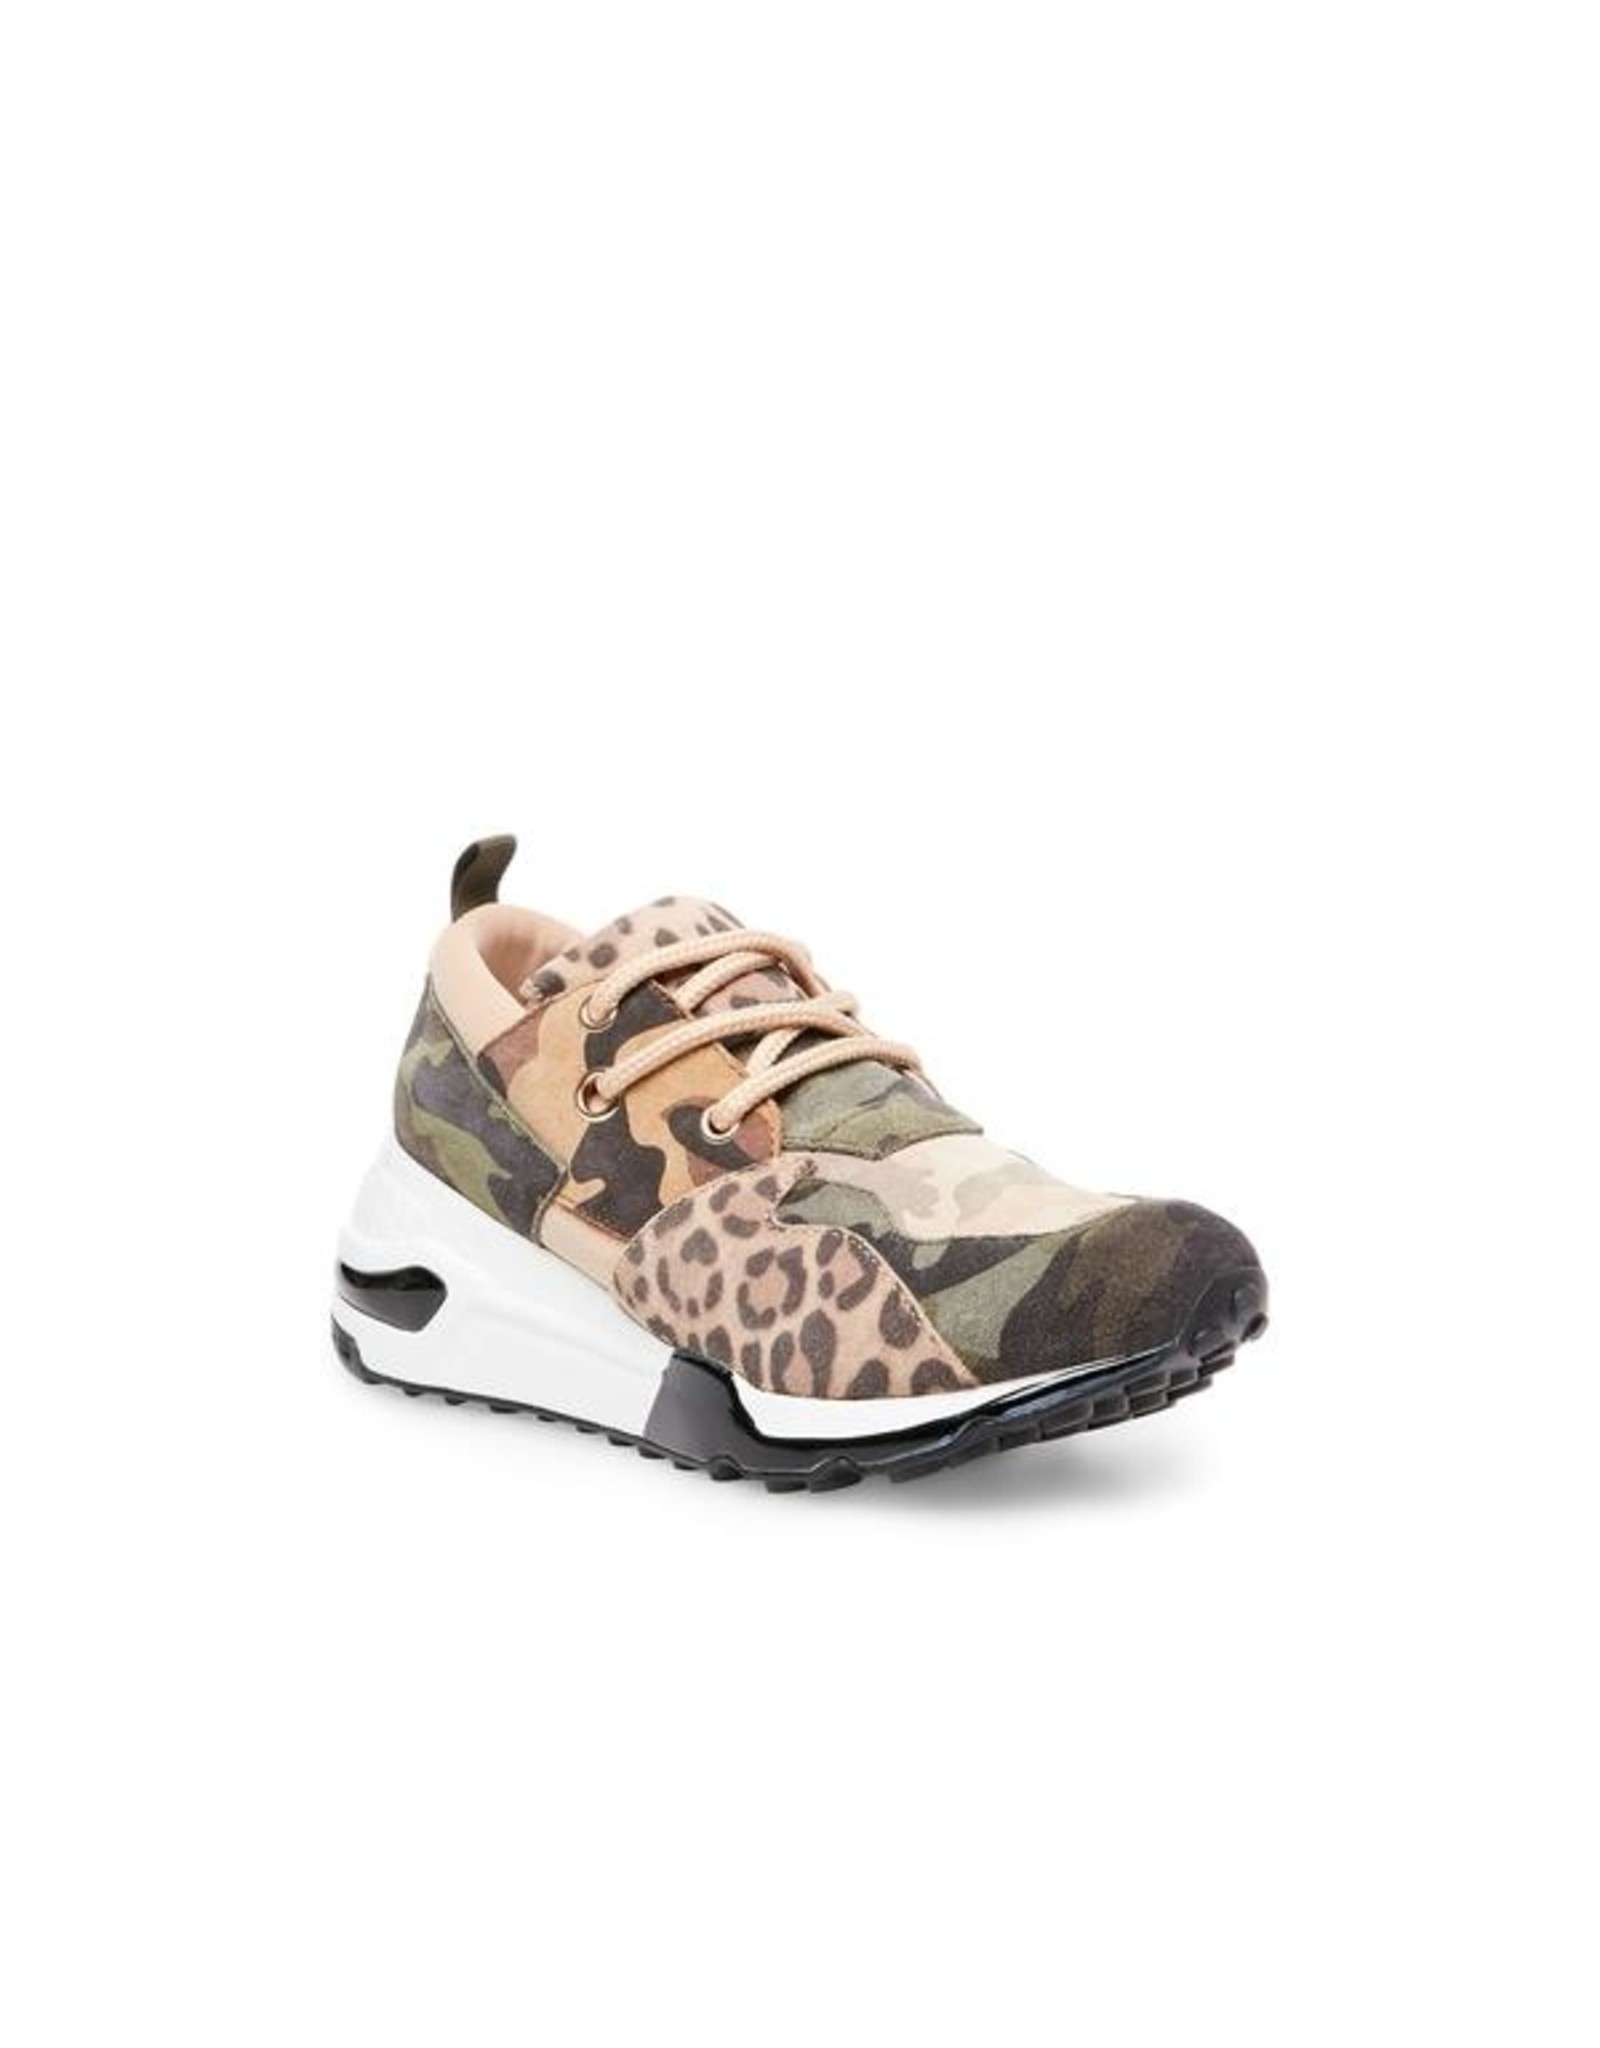 Steve Madden Cliff Camo/Leopard Shoes 